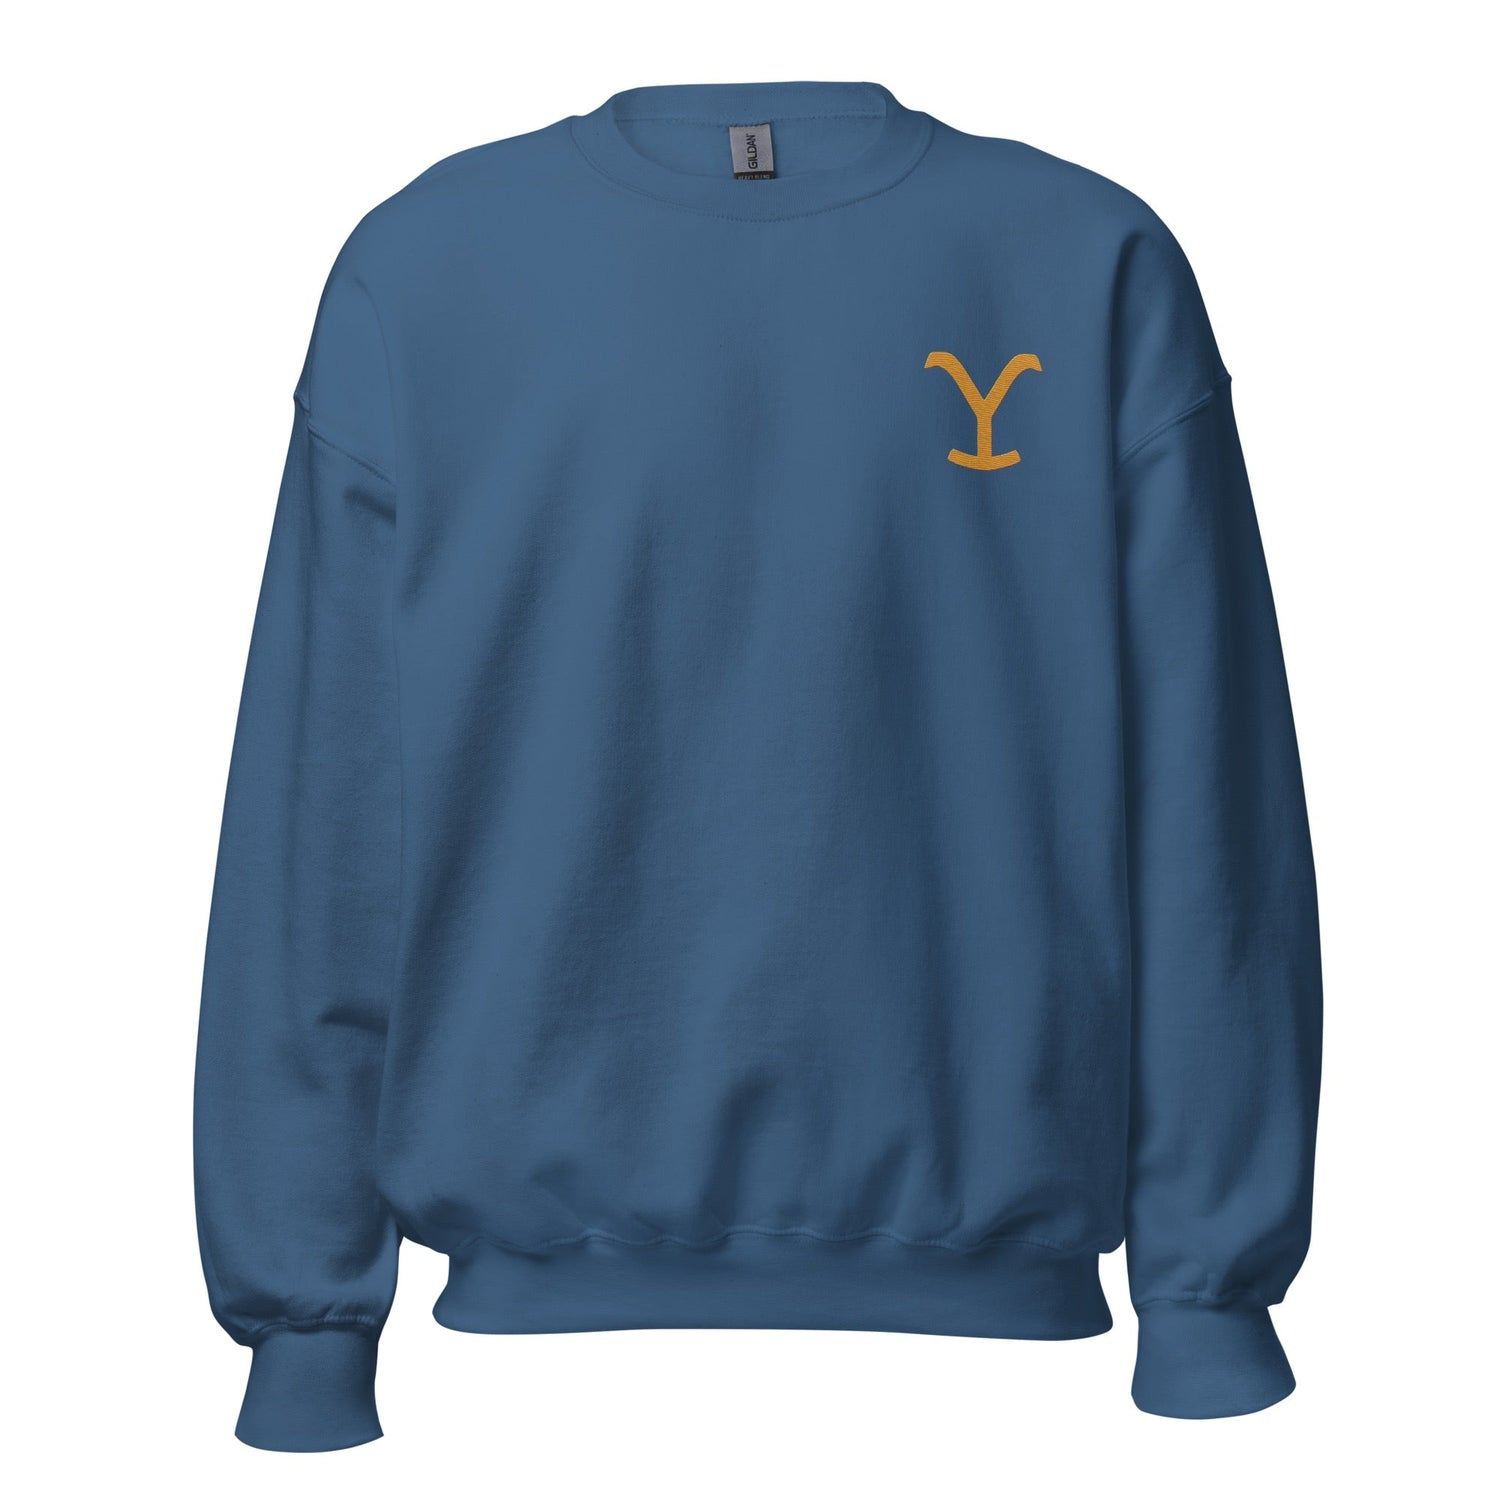 Yellowstone Y Embroidered Sweatshirt - Paramount Shop